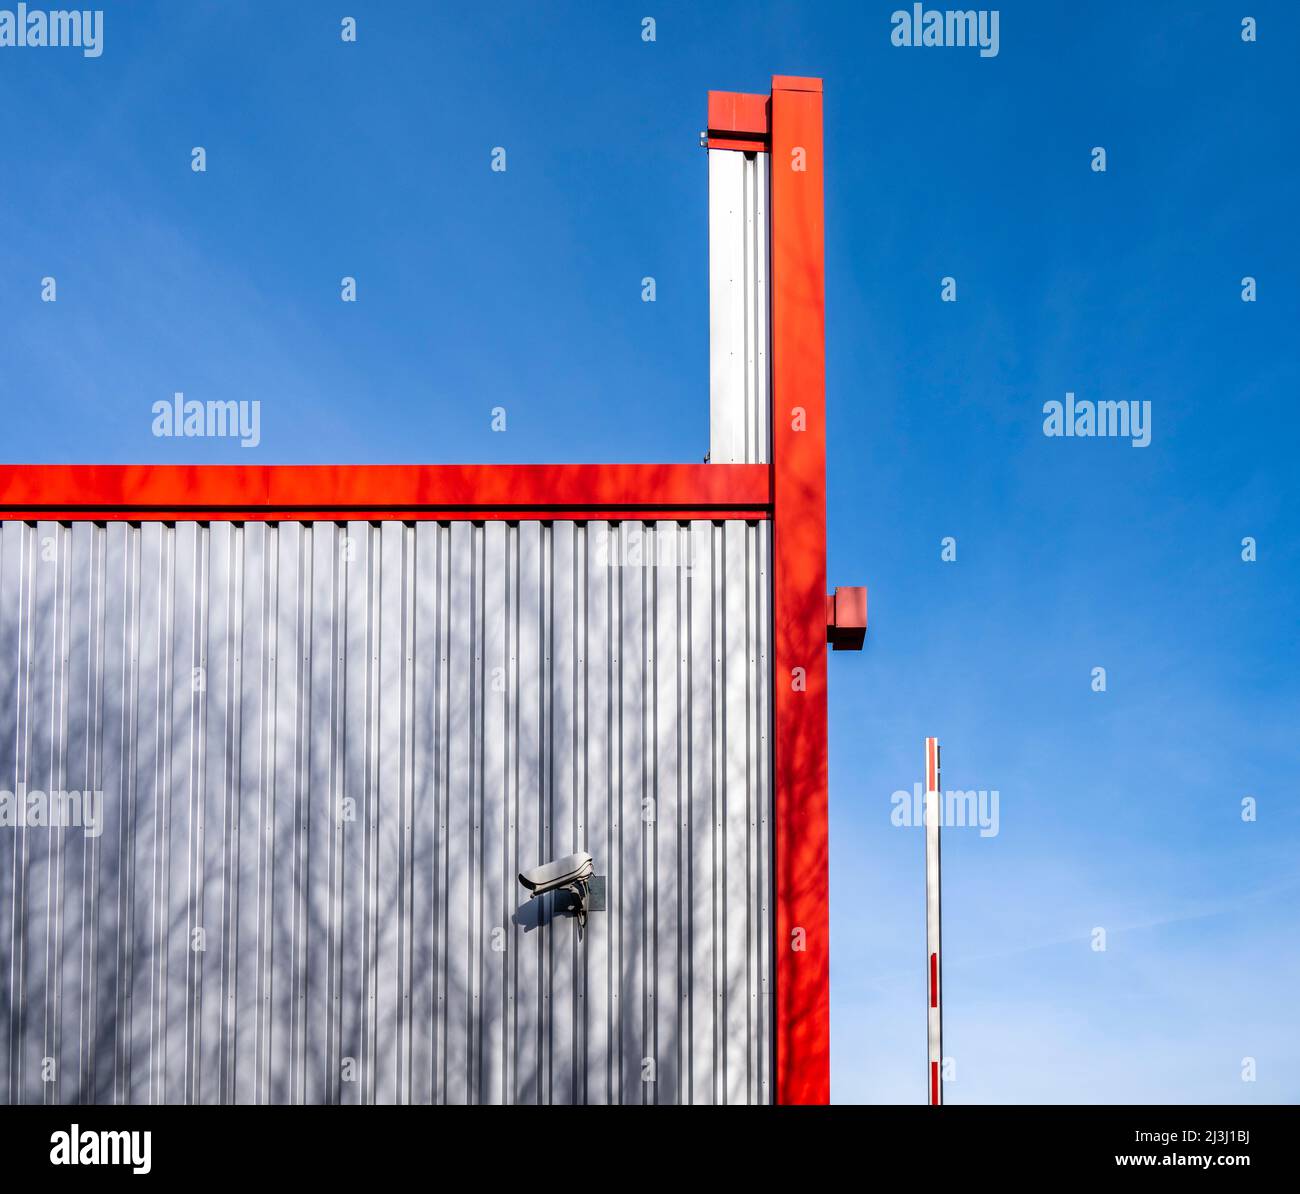 Wellblechgebäude, roter Rahmen, Barriere, rot weiß, Stockfoto